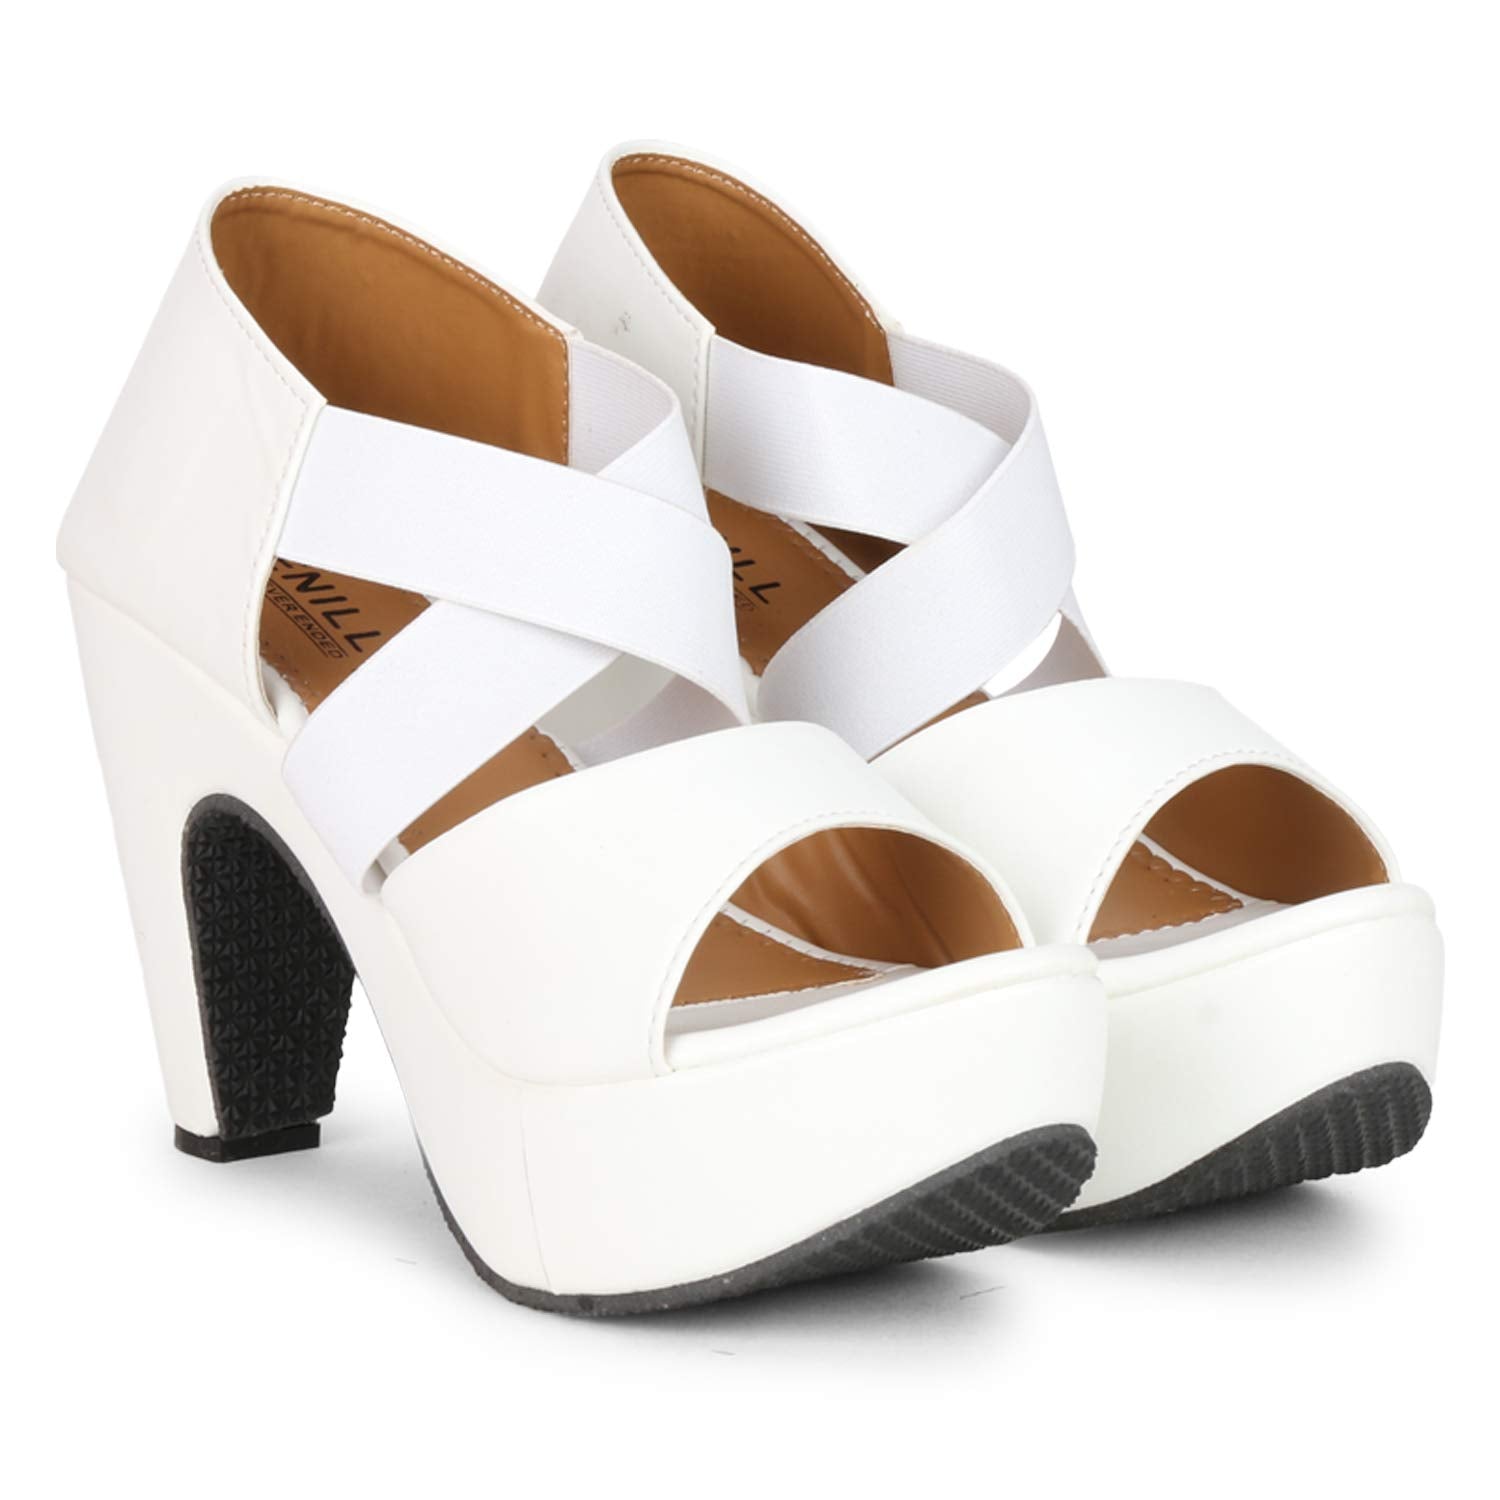 Denill WOMEN PULL ON BLOCK HEELS -  Fashion Sandals in Sri Lanka from Arcade Online Shopping - Just Rs. 4899!